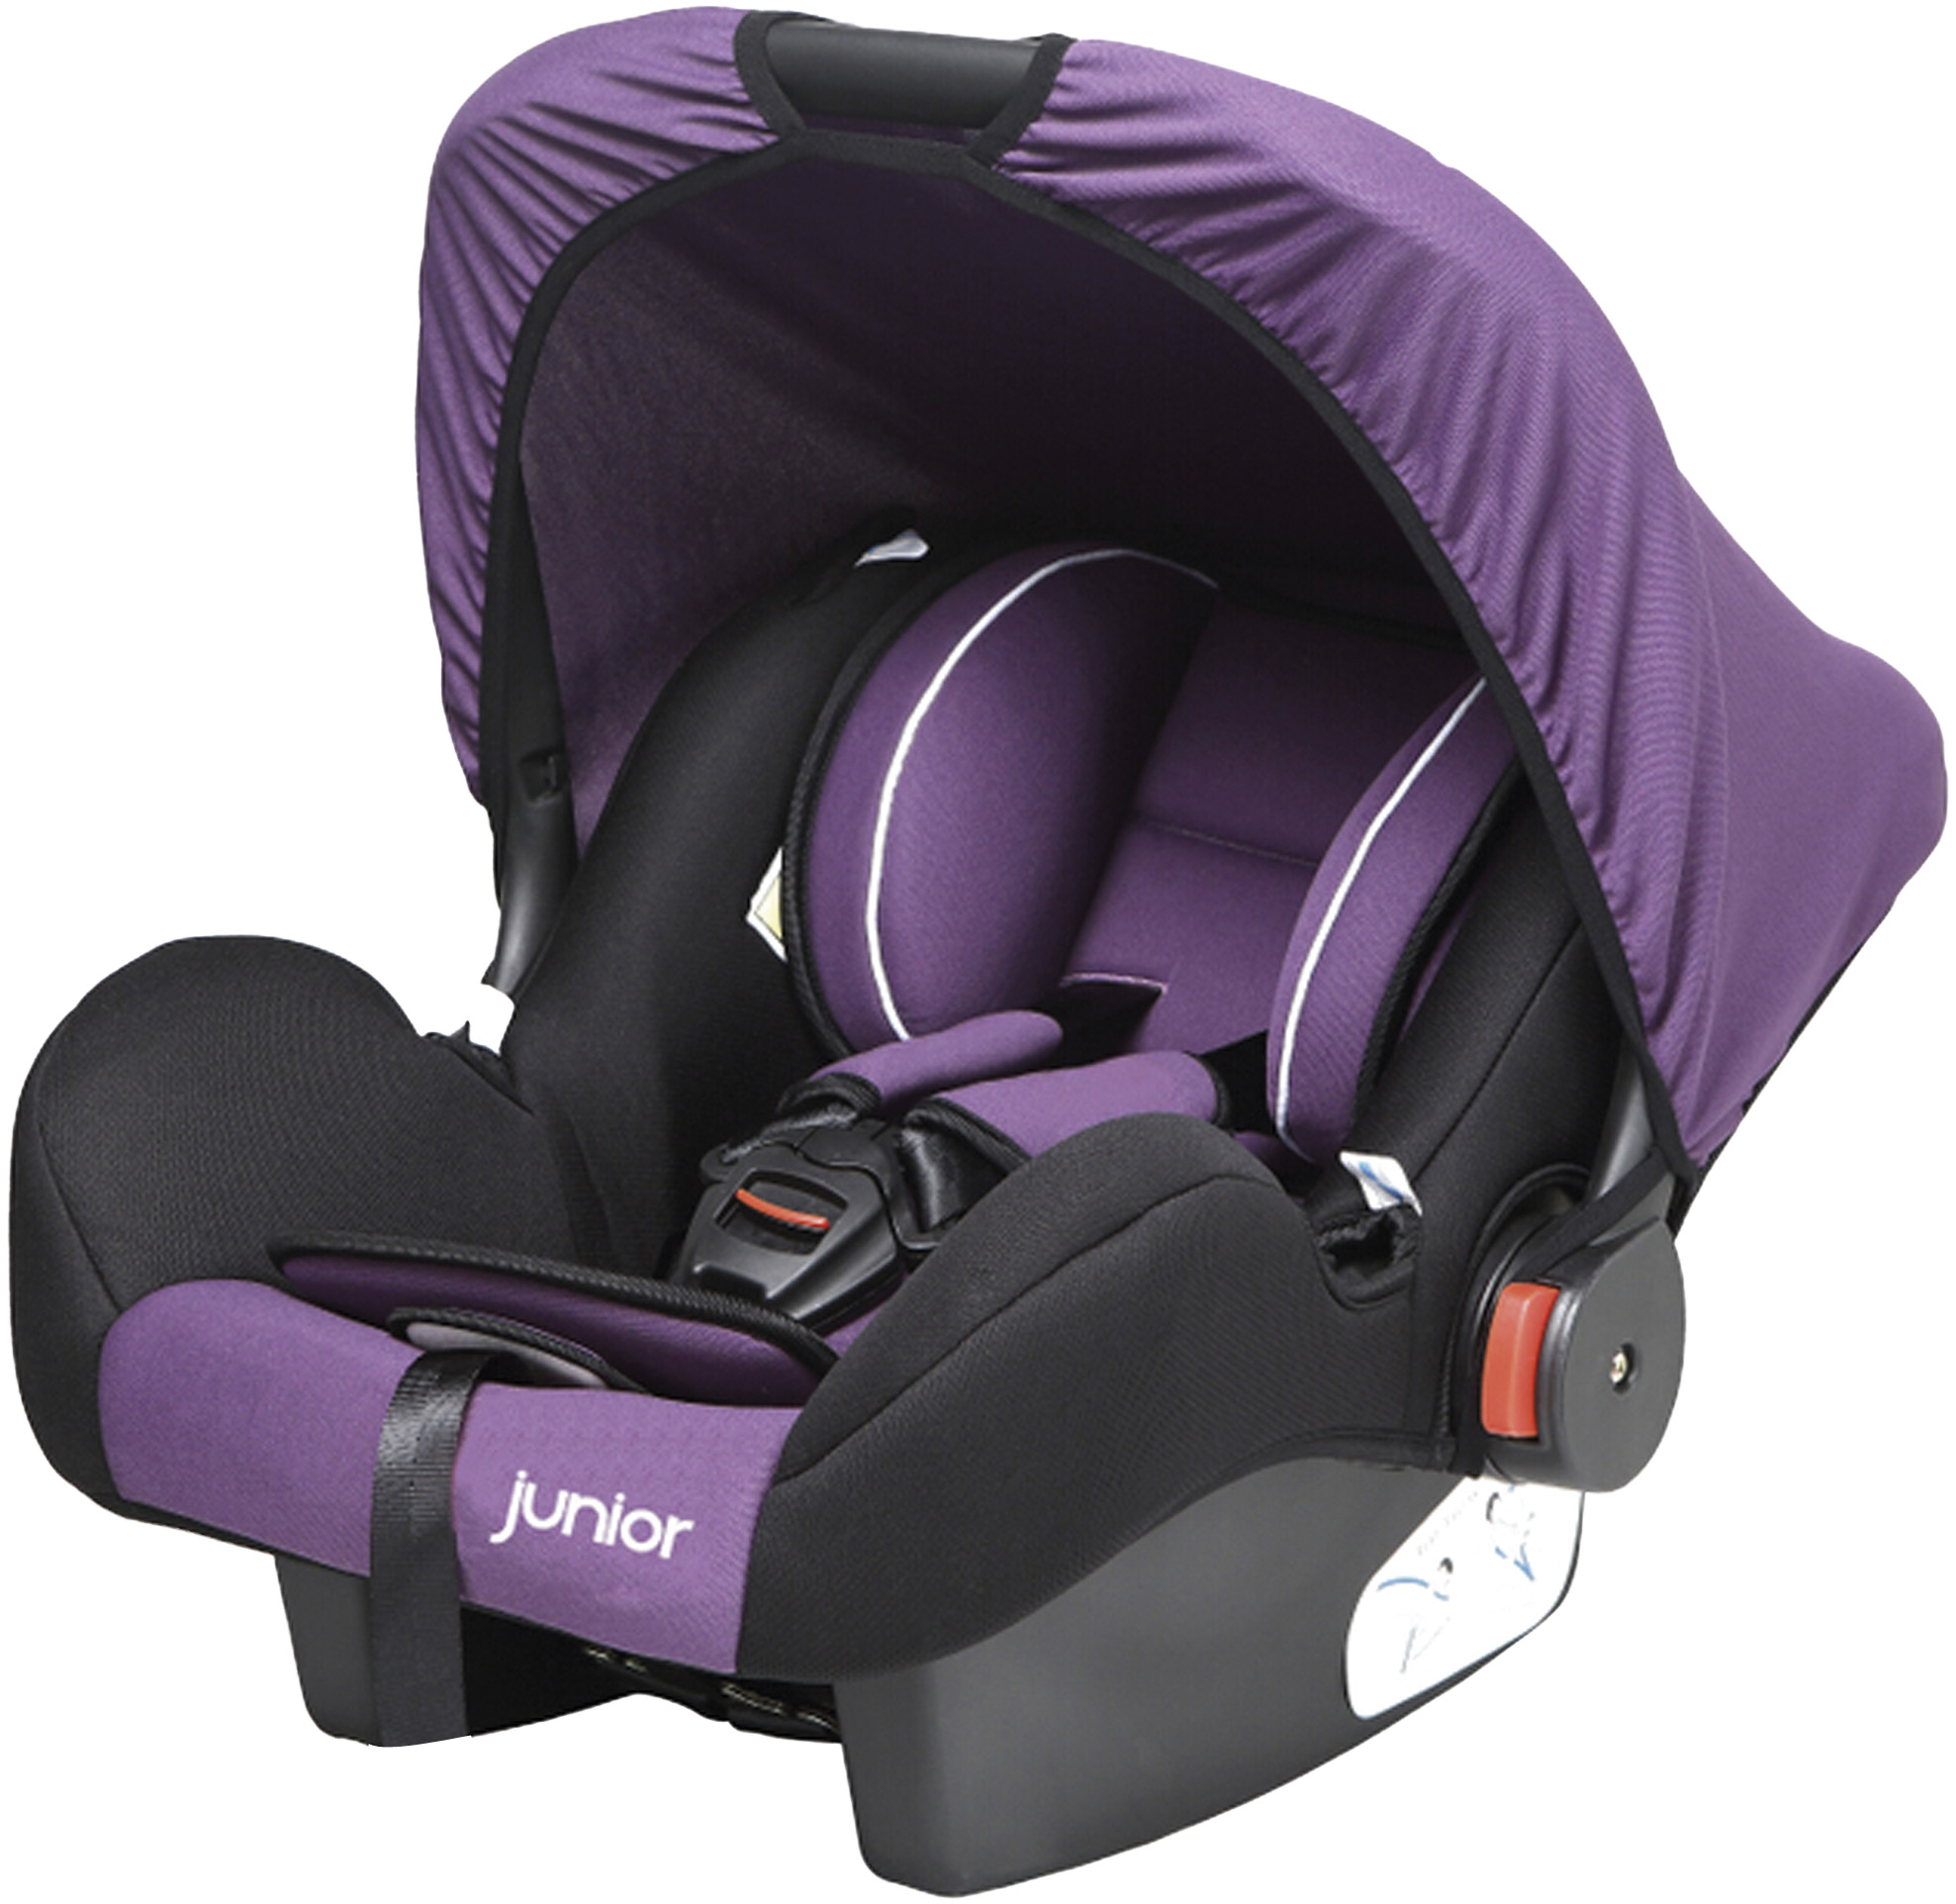 Bambini violett | Kinderschalensitz Bambini | PETEX junior | PETEX  Onlineshop | Autozubehör direkt vom Hersteller | Autokindersitze